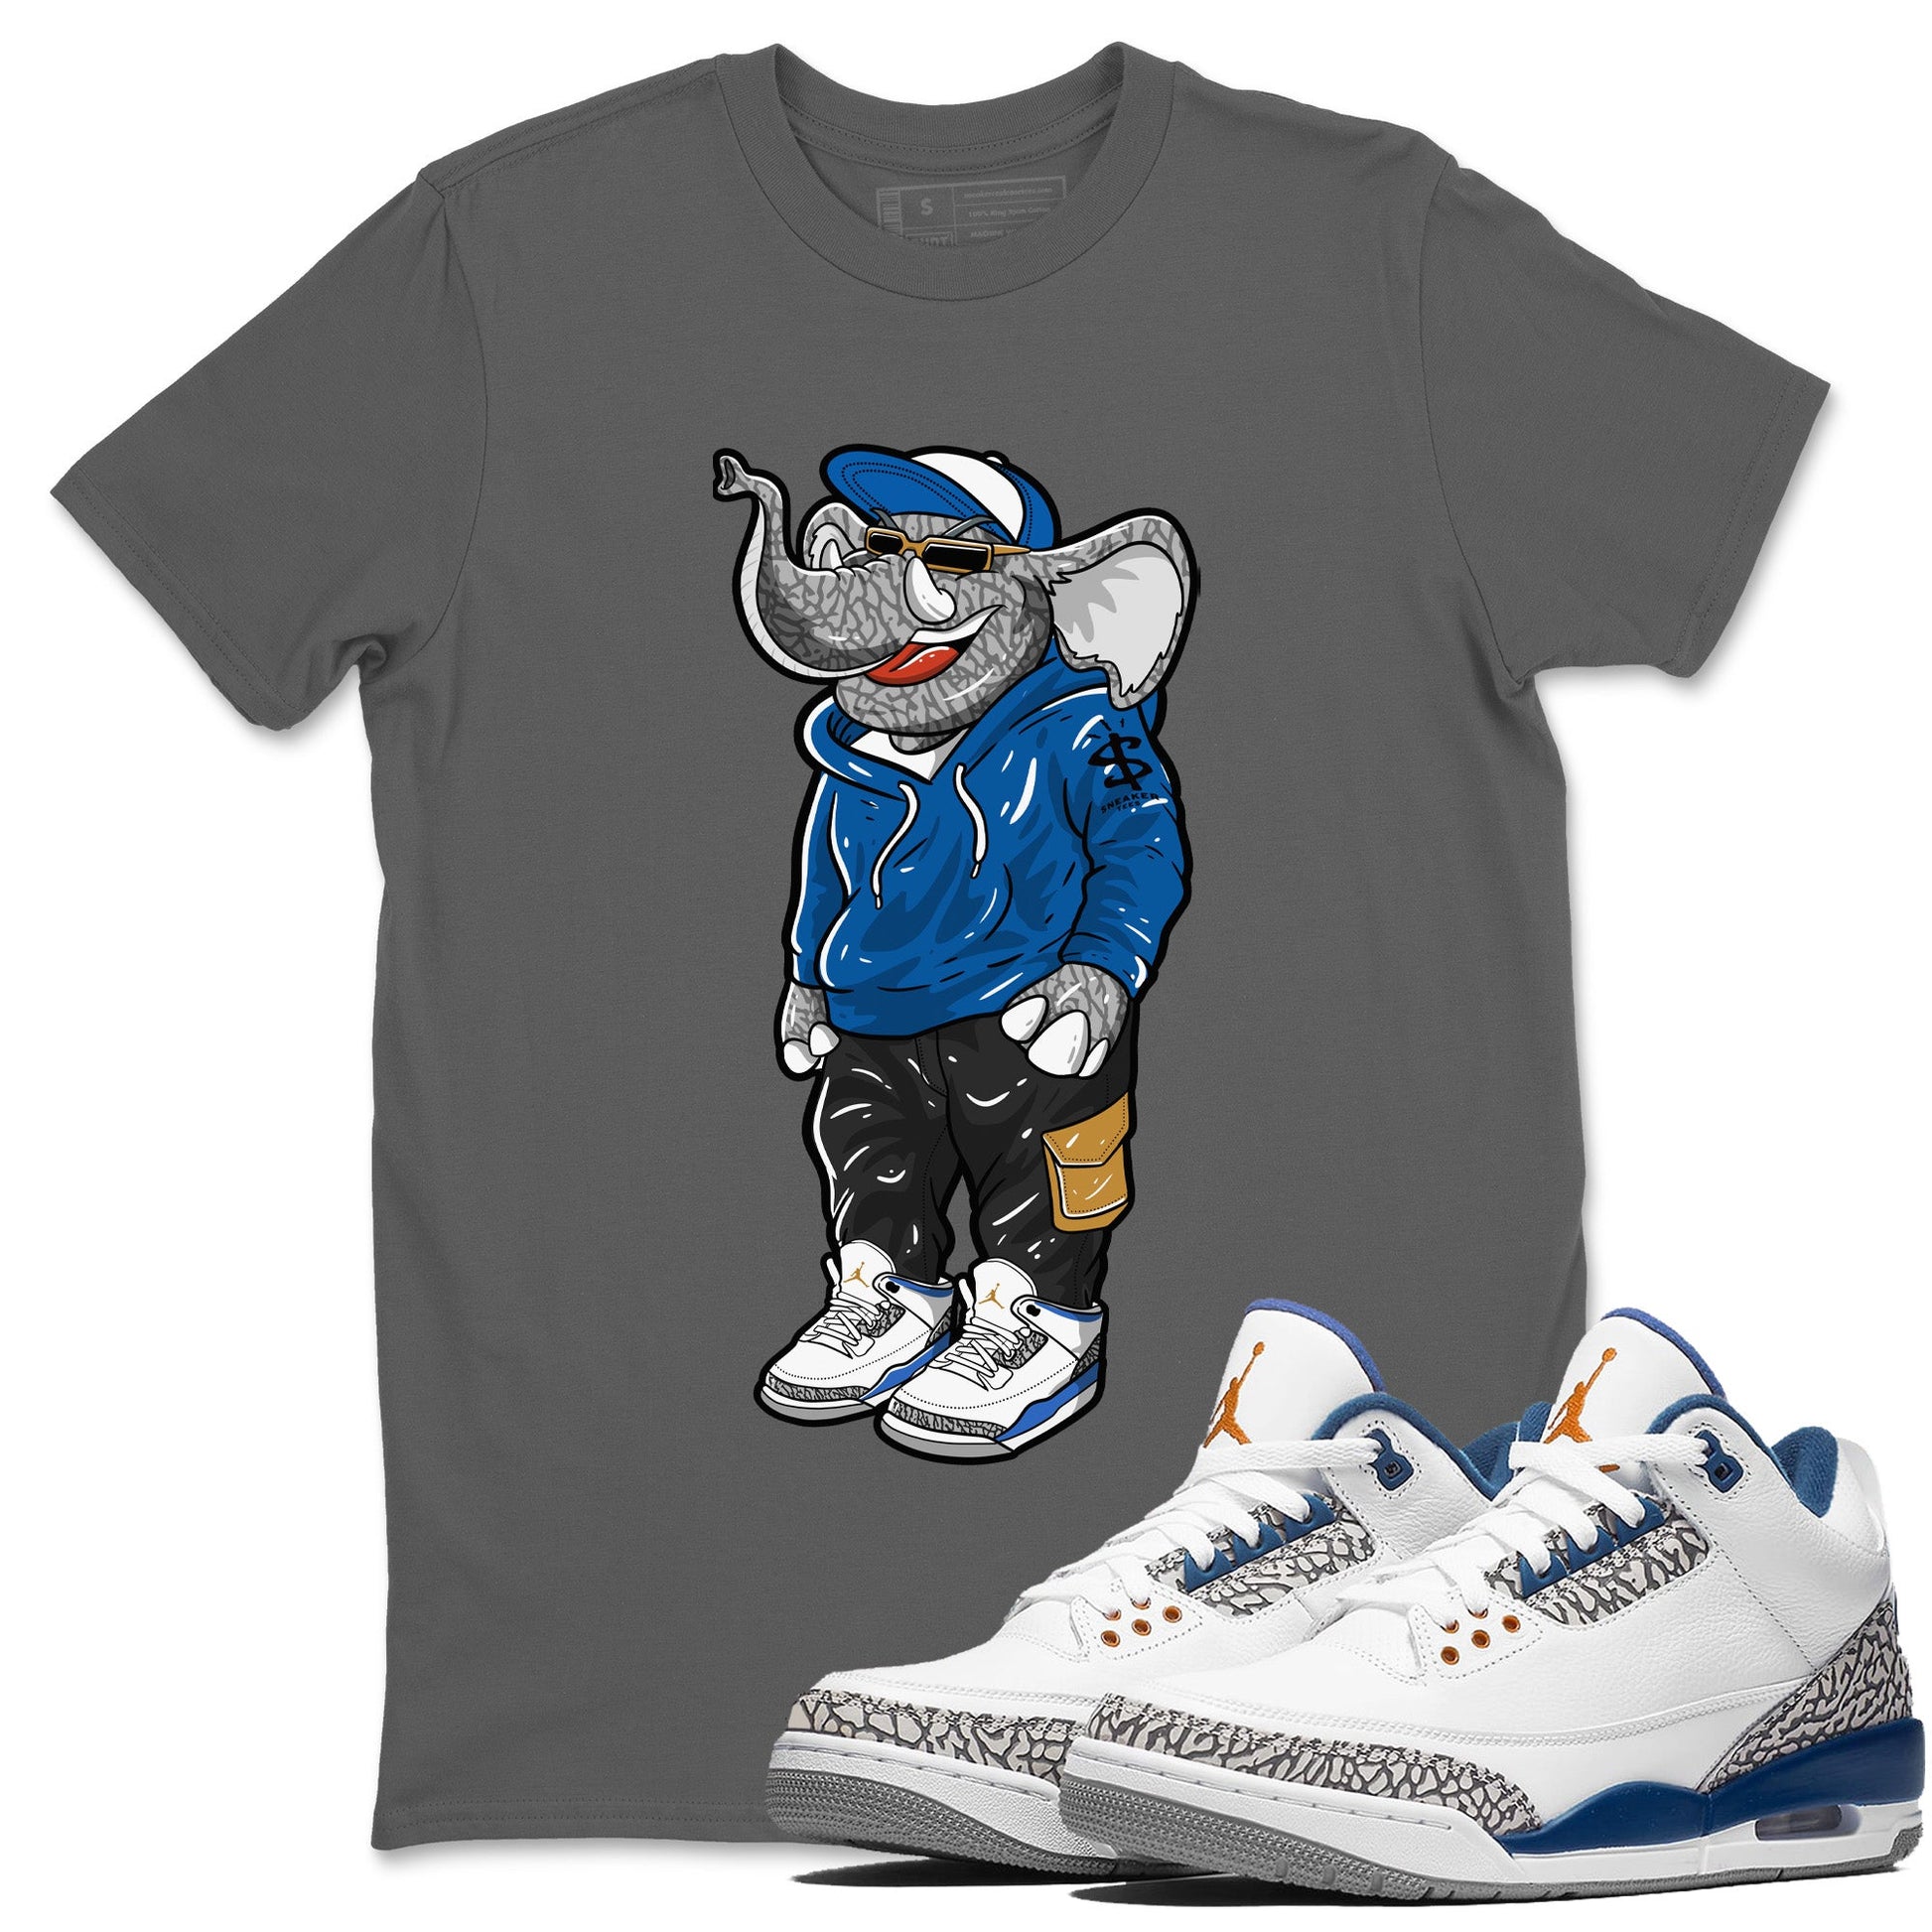  Shirt To Match Jordan Retro 3 Wizards/True Blue Cement